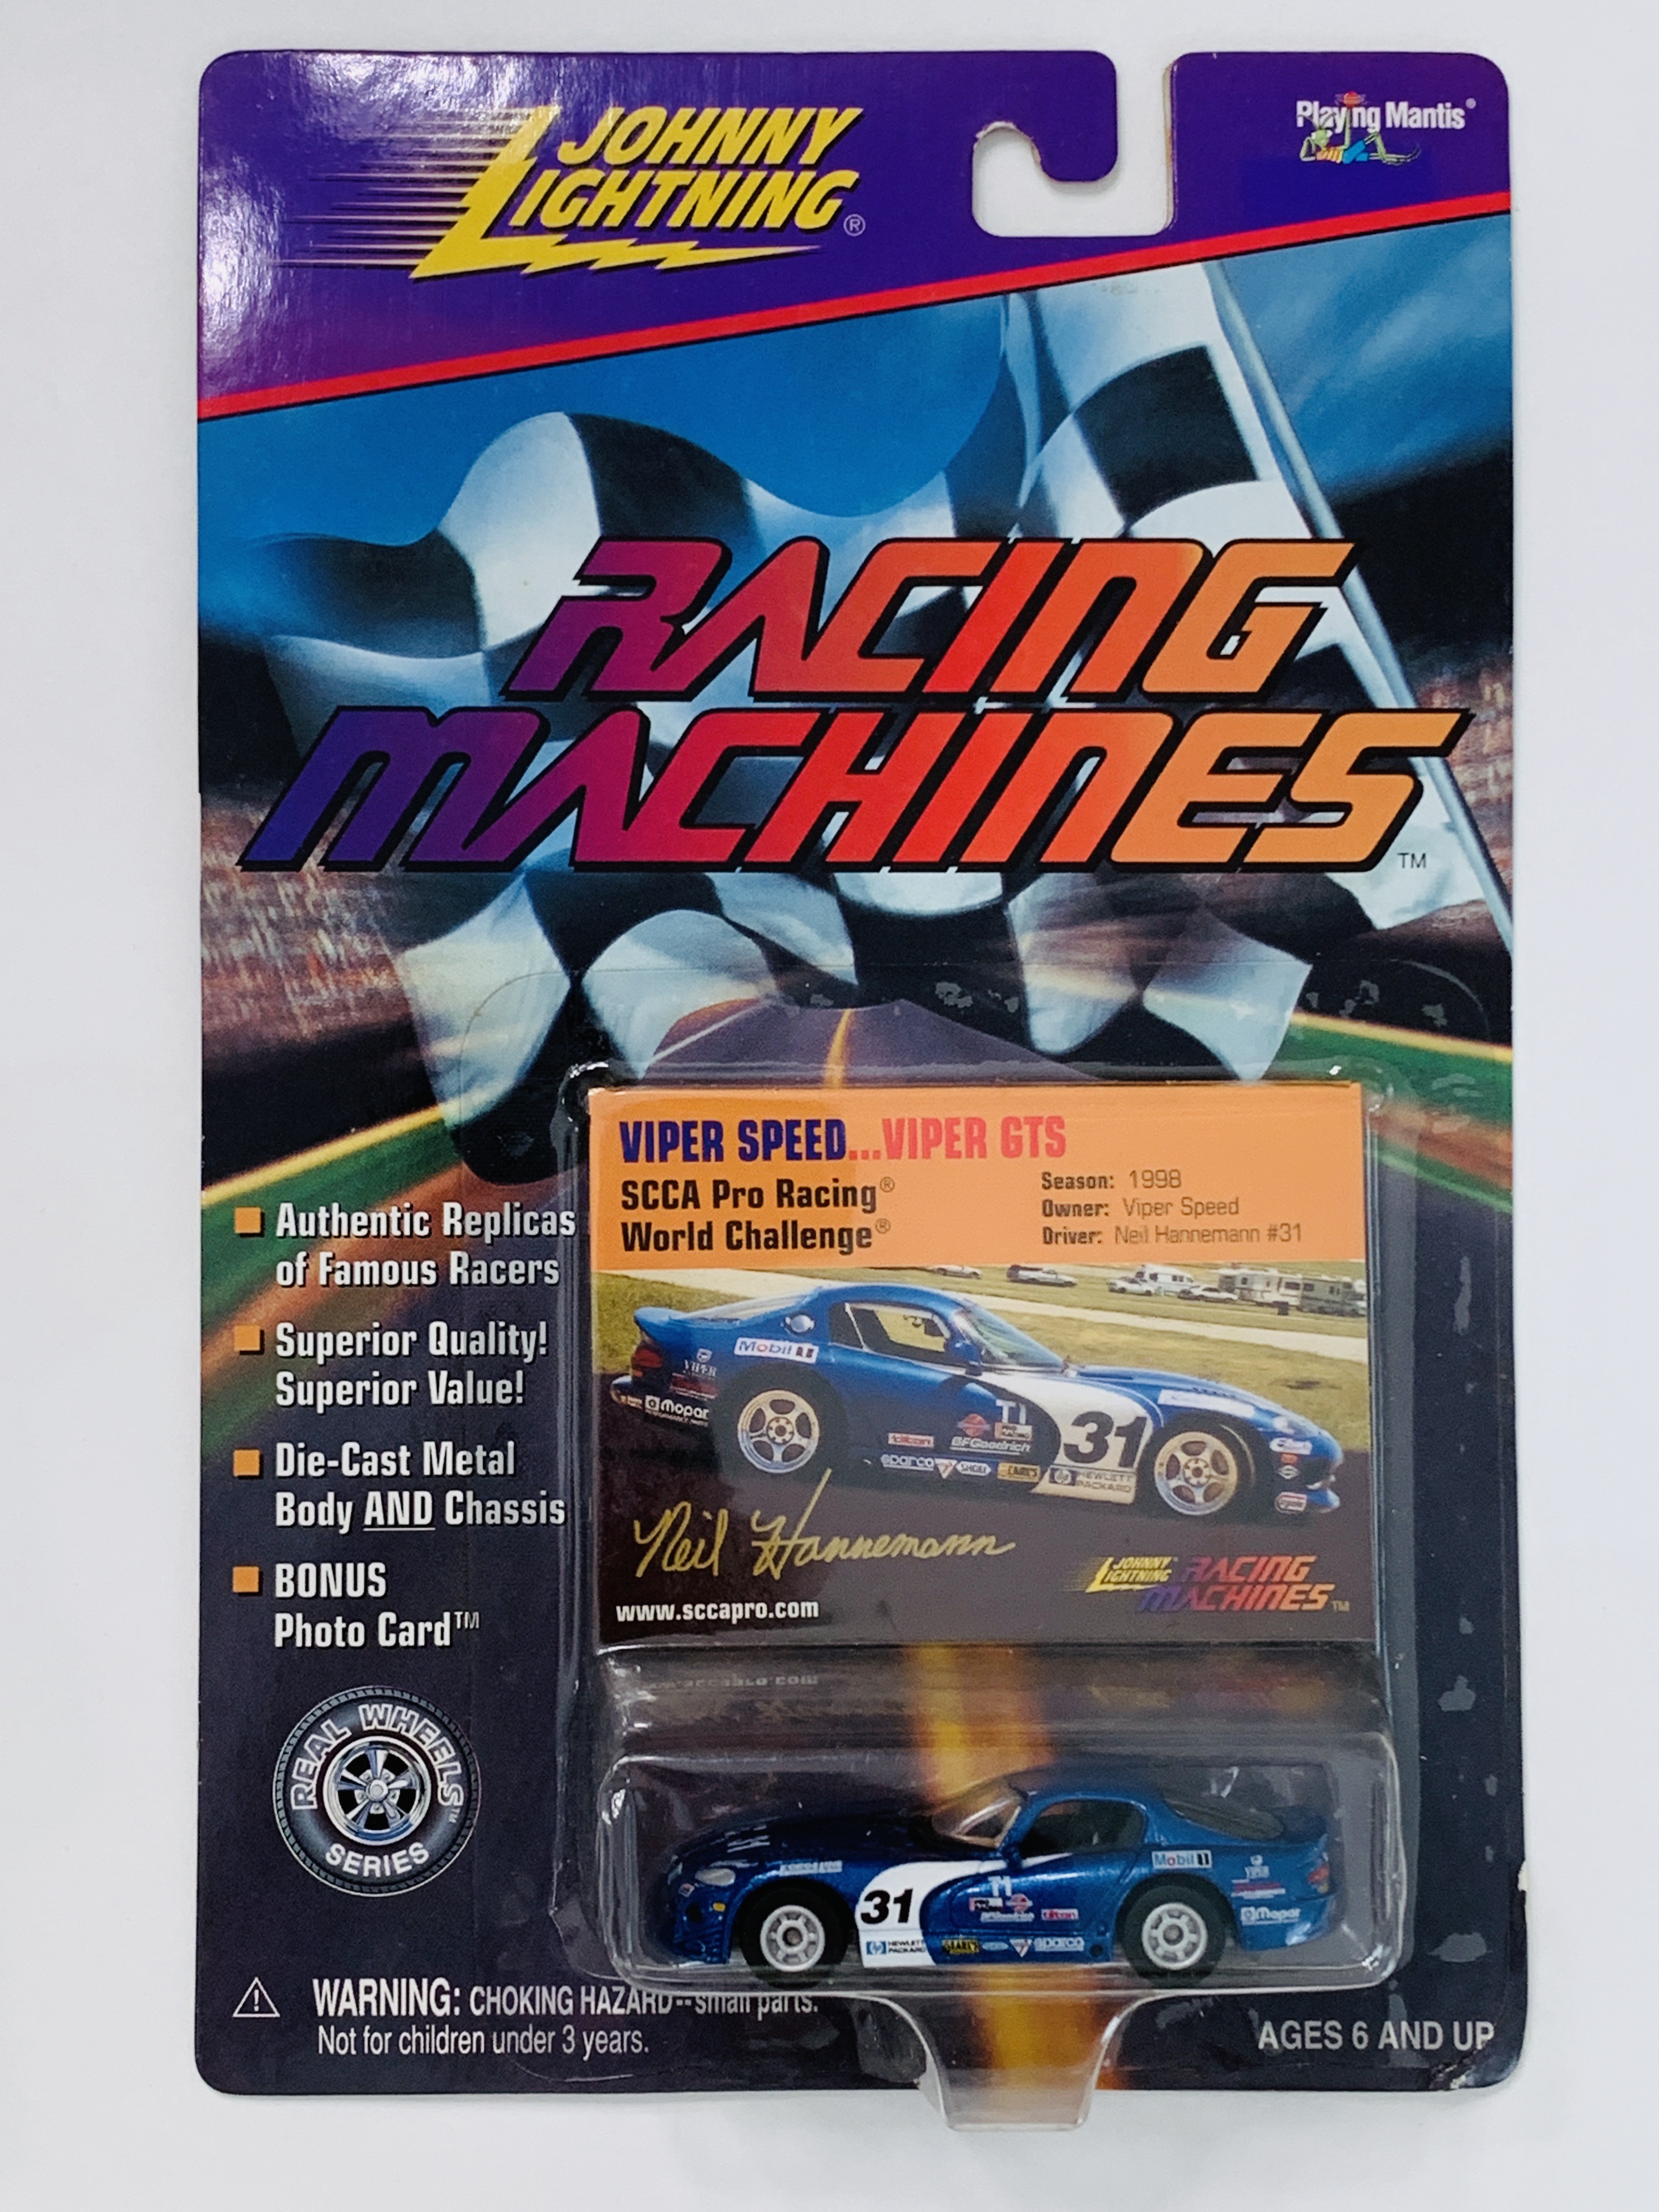 Johnny Lightning Racing Machines Viper Speed Viper GTS